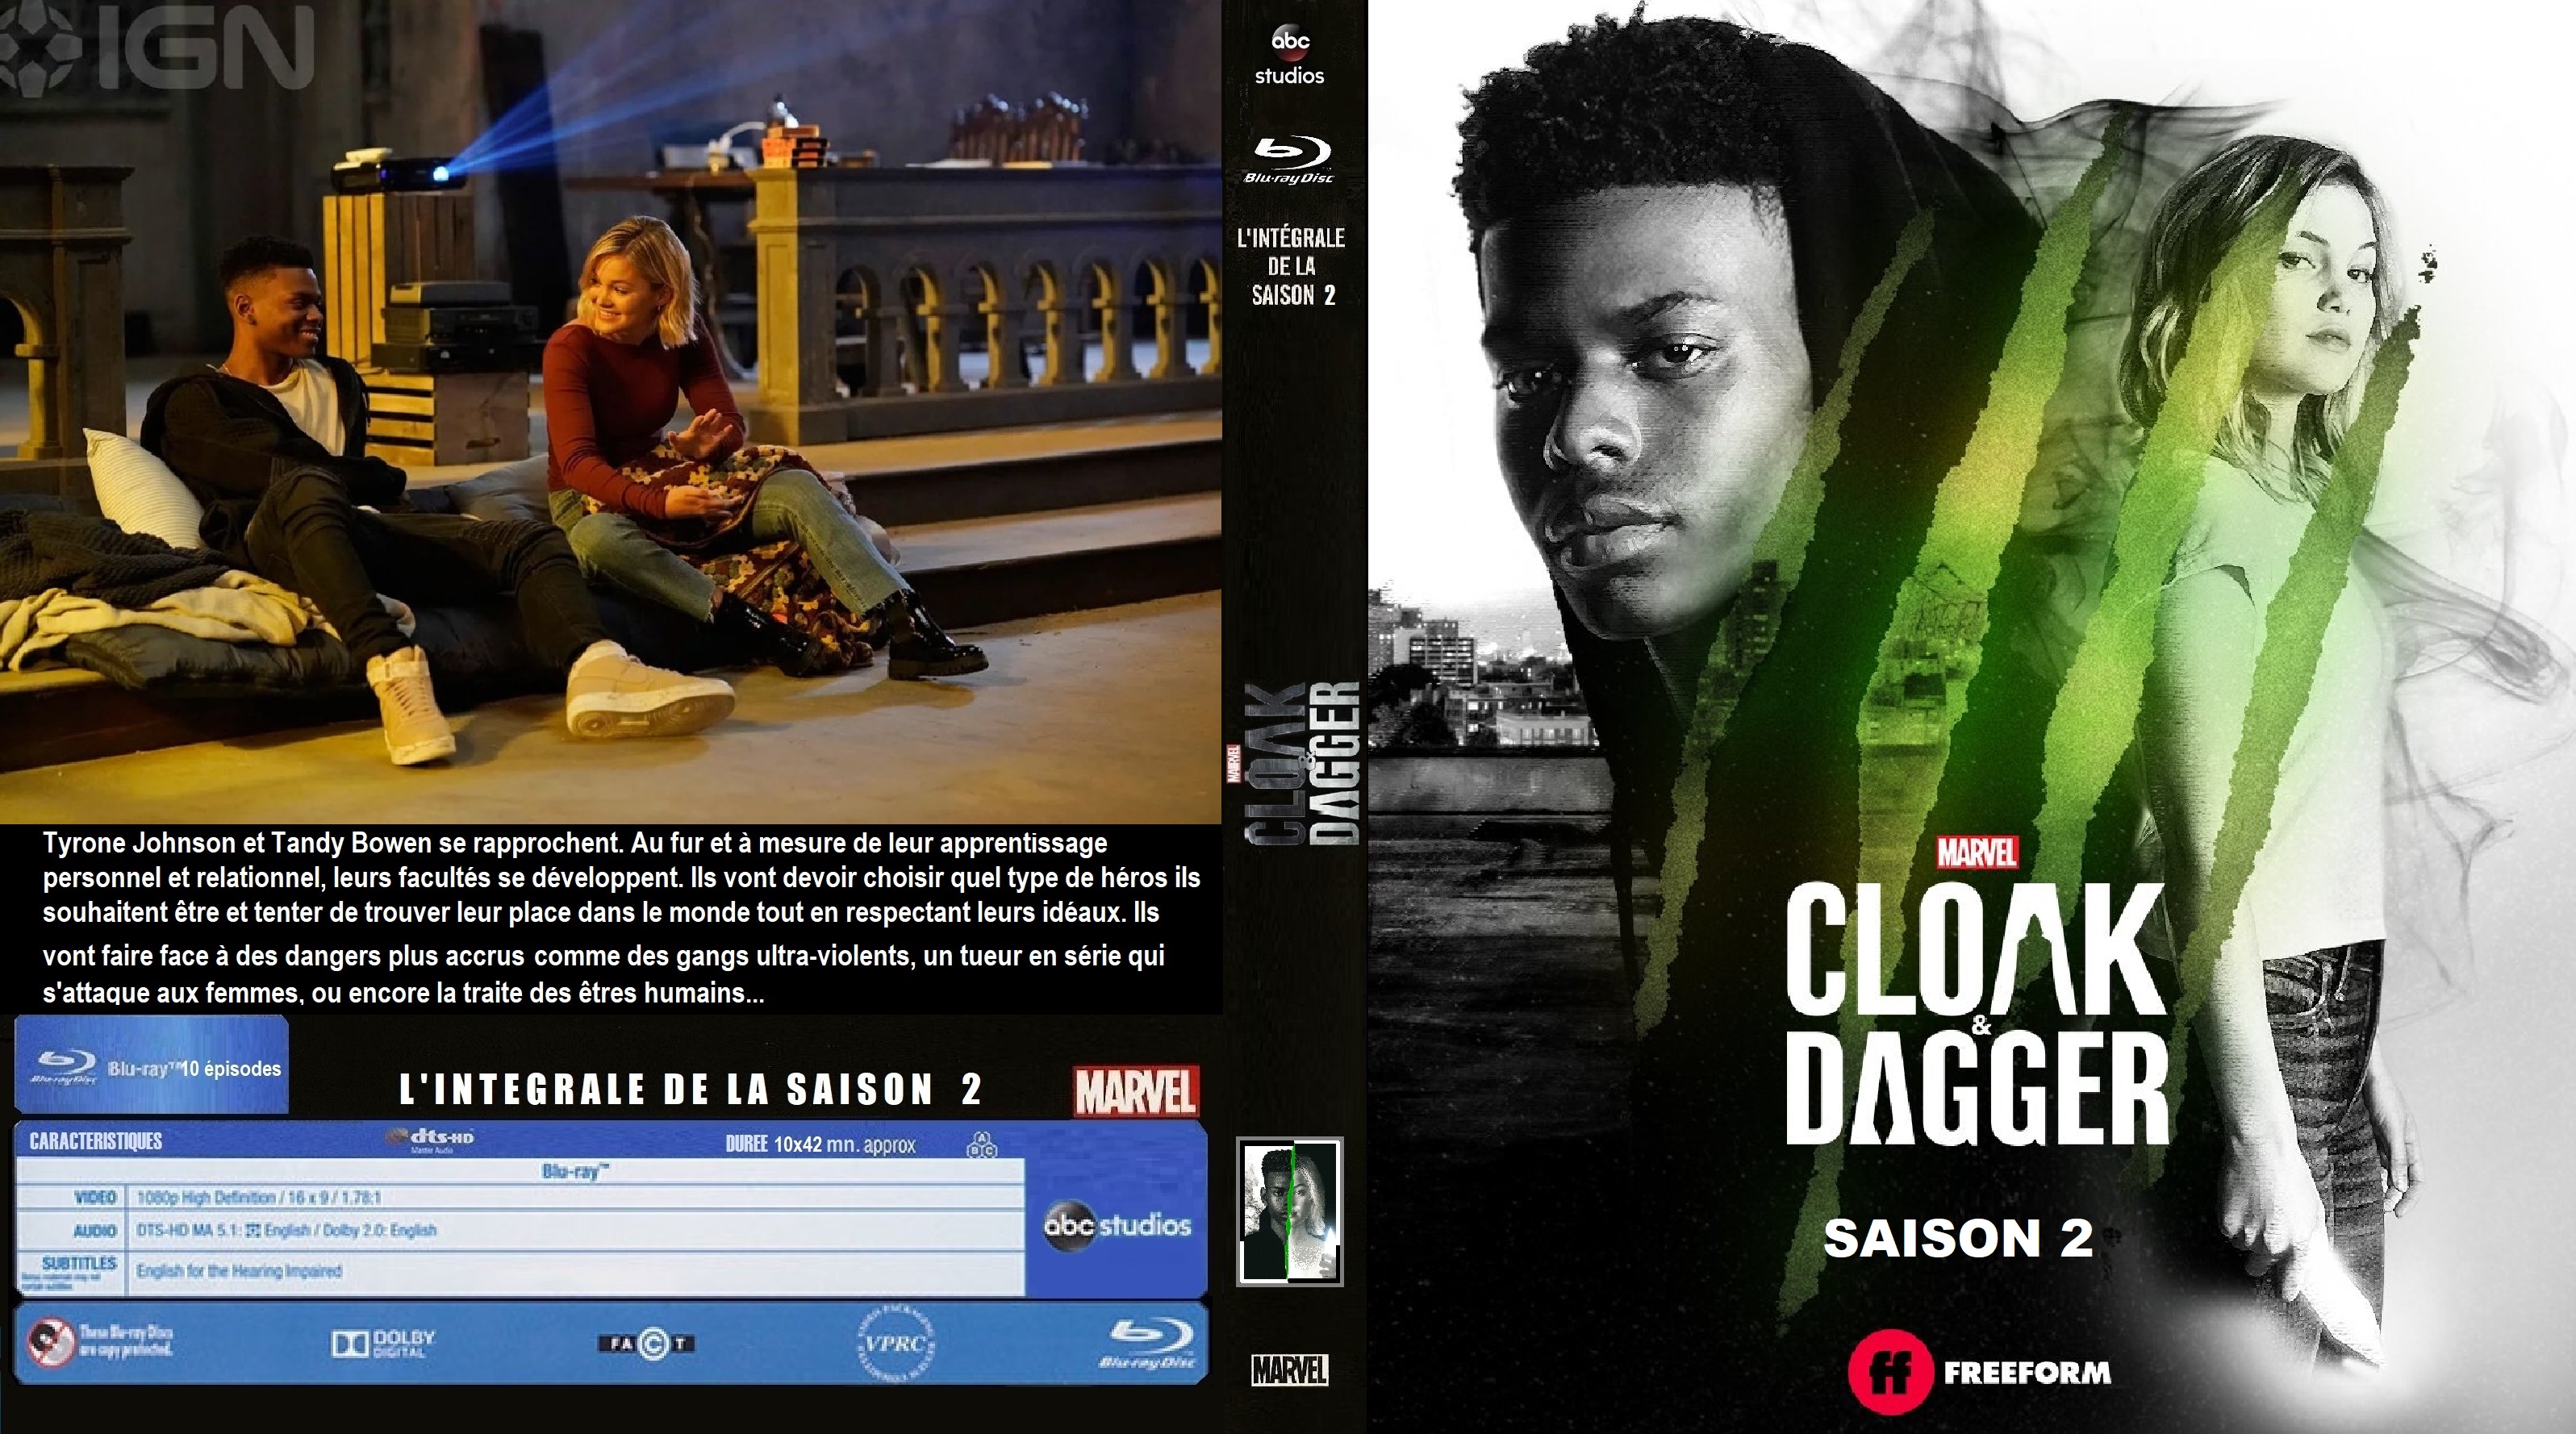 Jaquette DVD Cloak & Dagger saison 2 custom (BLU-RAY) v2